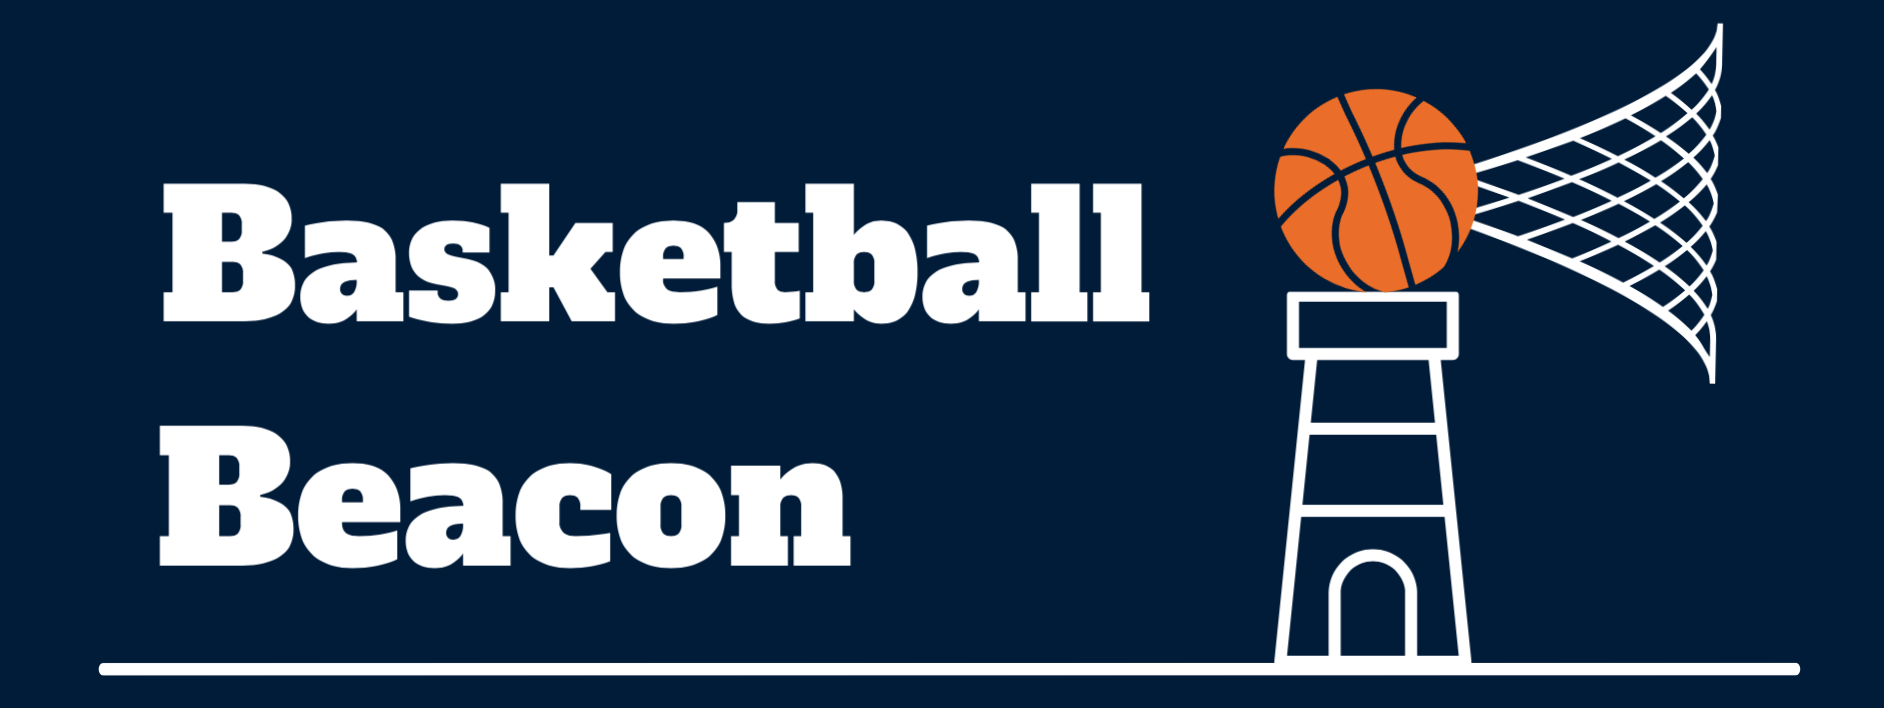 Joe Harris Player Profile - Basketball Beacon